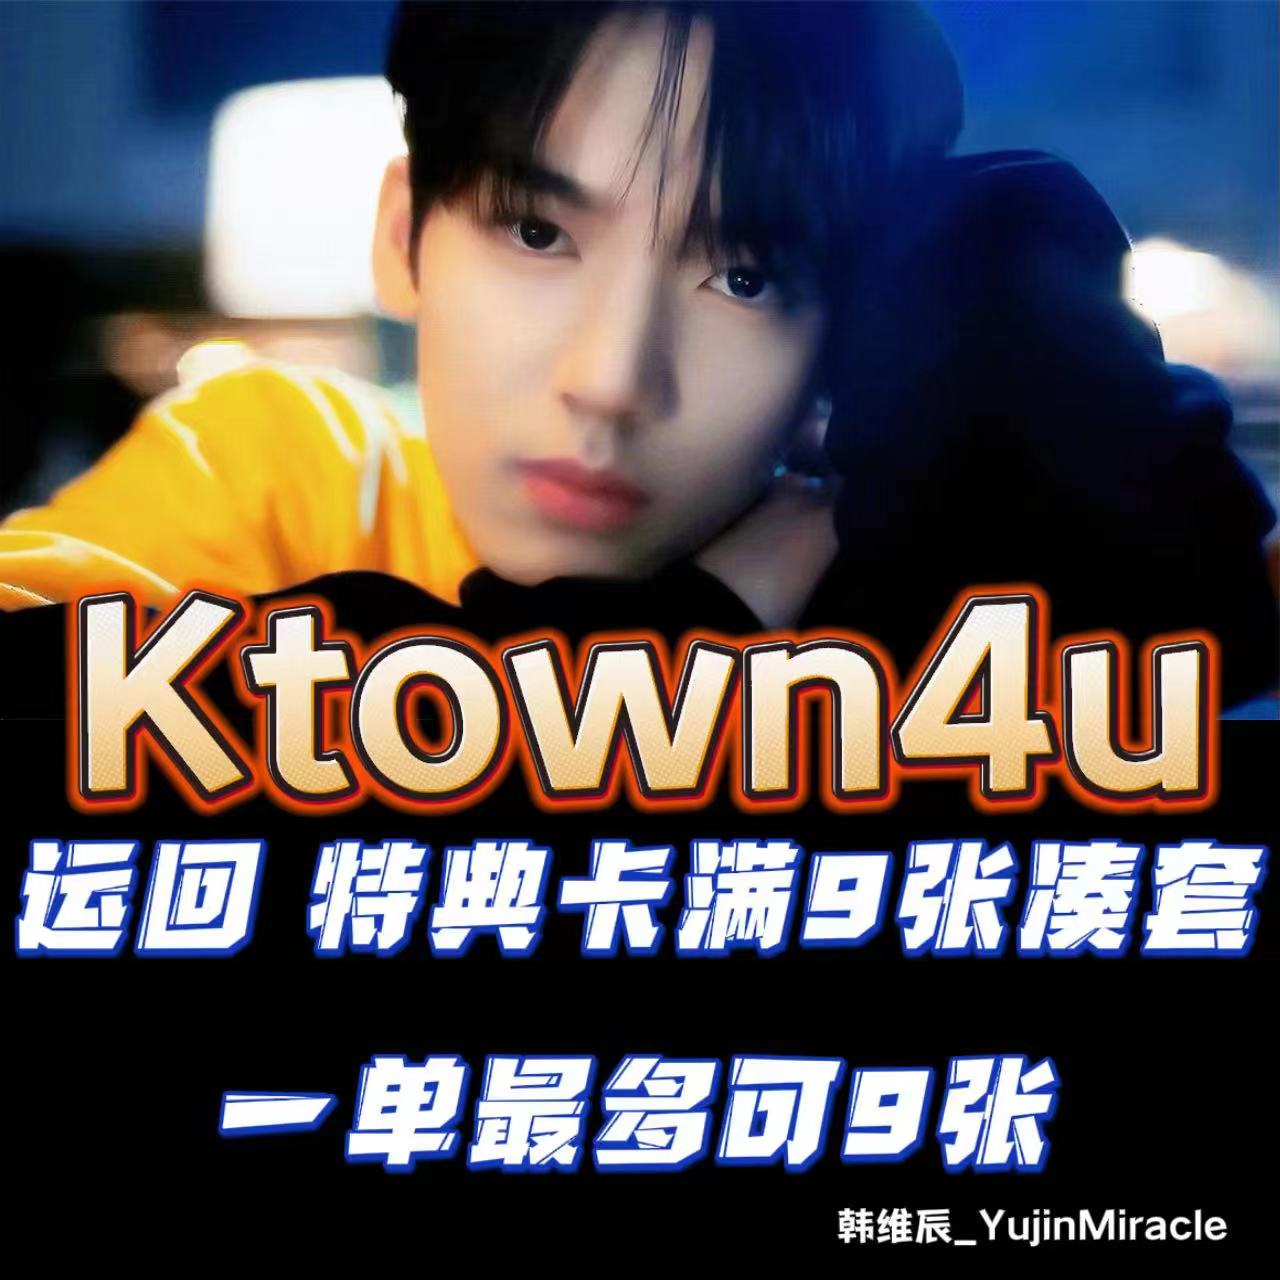 [全款 裸专] 【预售特典】 [Ktown4u Special Gift] ZEROBASEONE - 迷你1辑 [YOUTH IN THE SHADE] (随机版本)_韩维辰_YujinMiracle